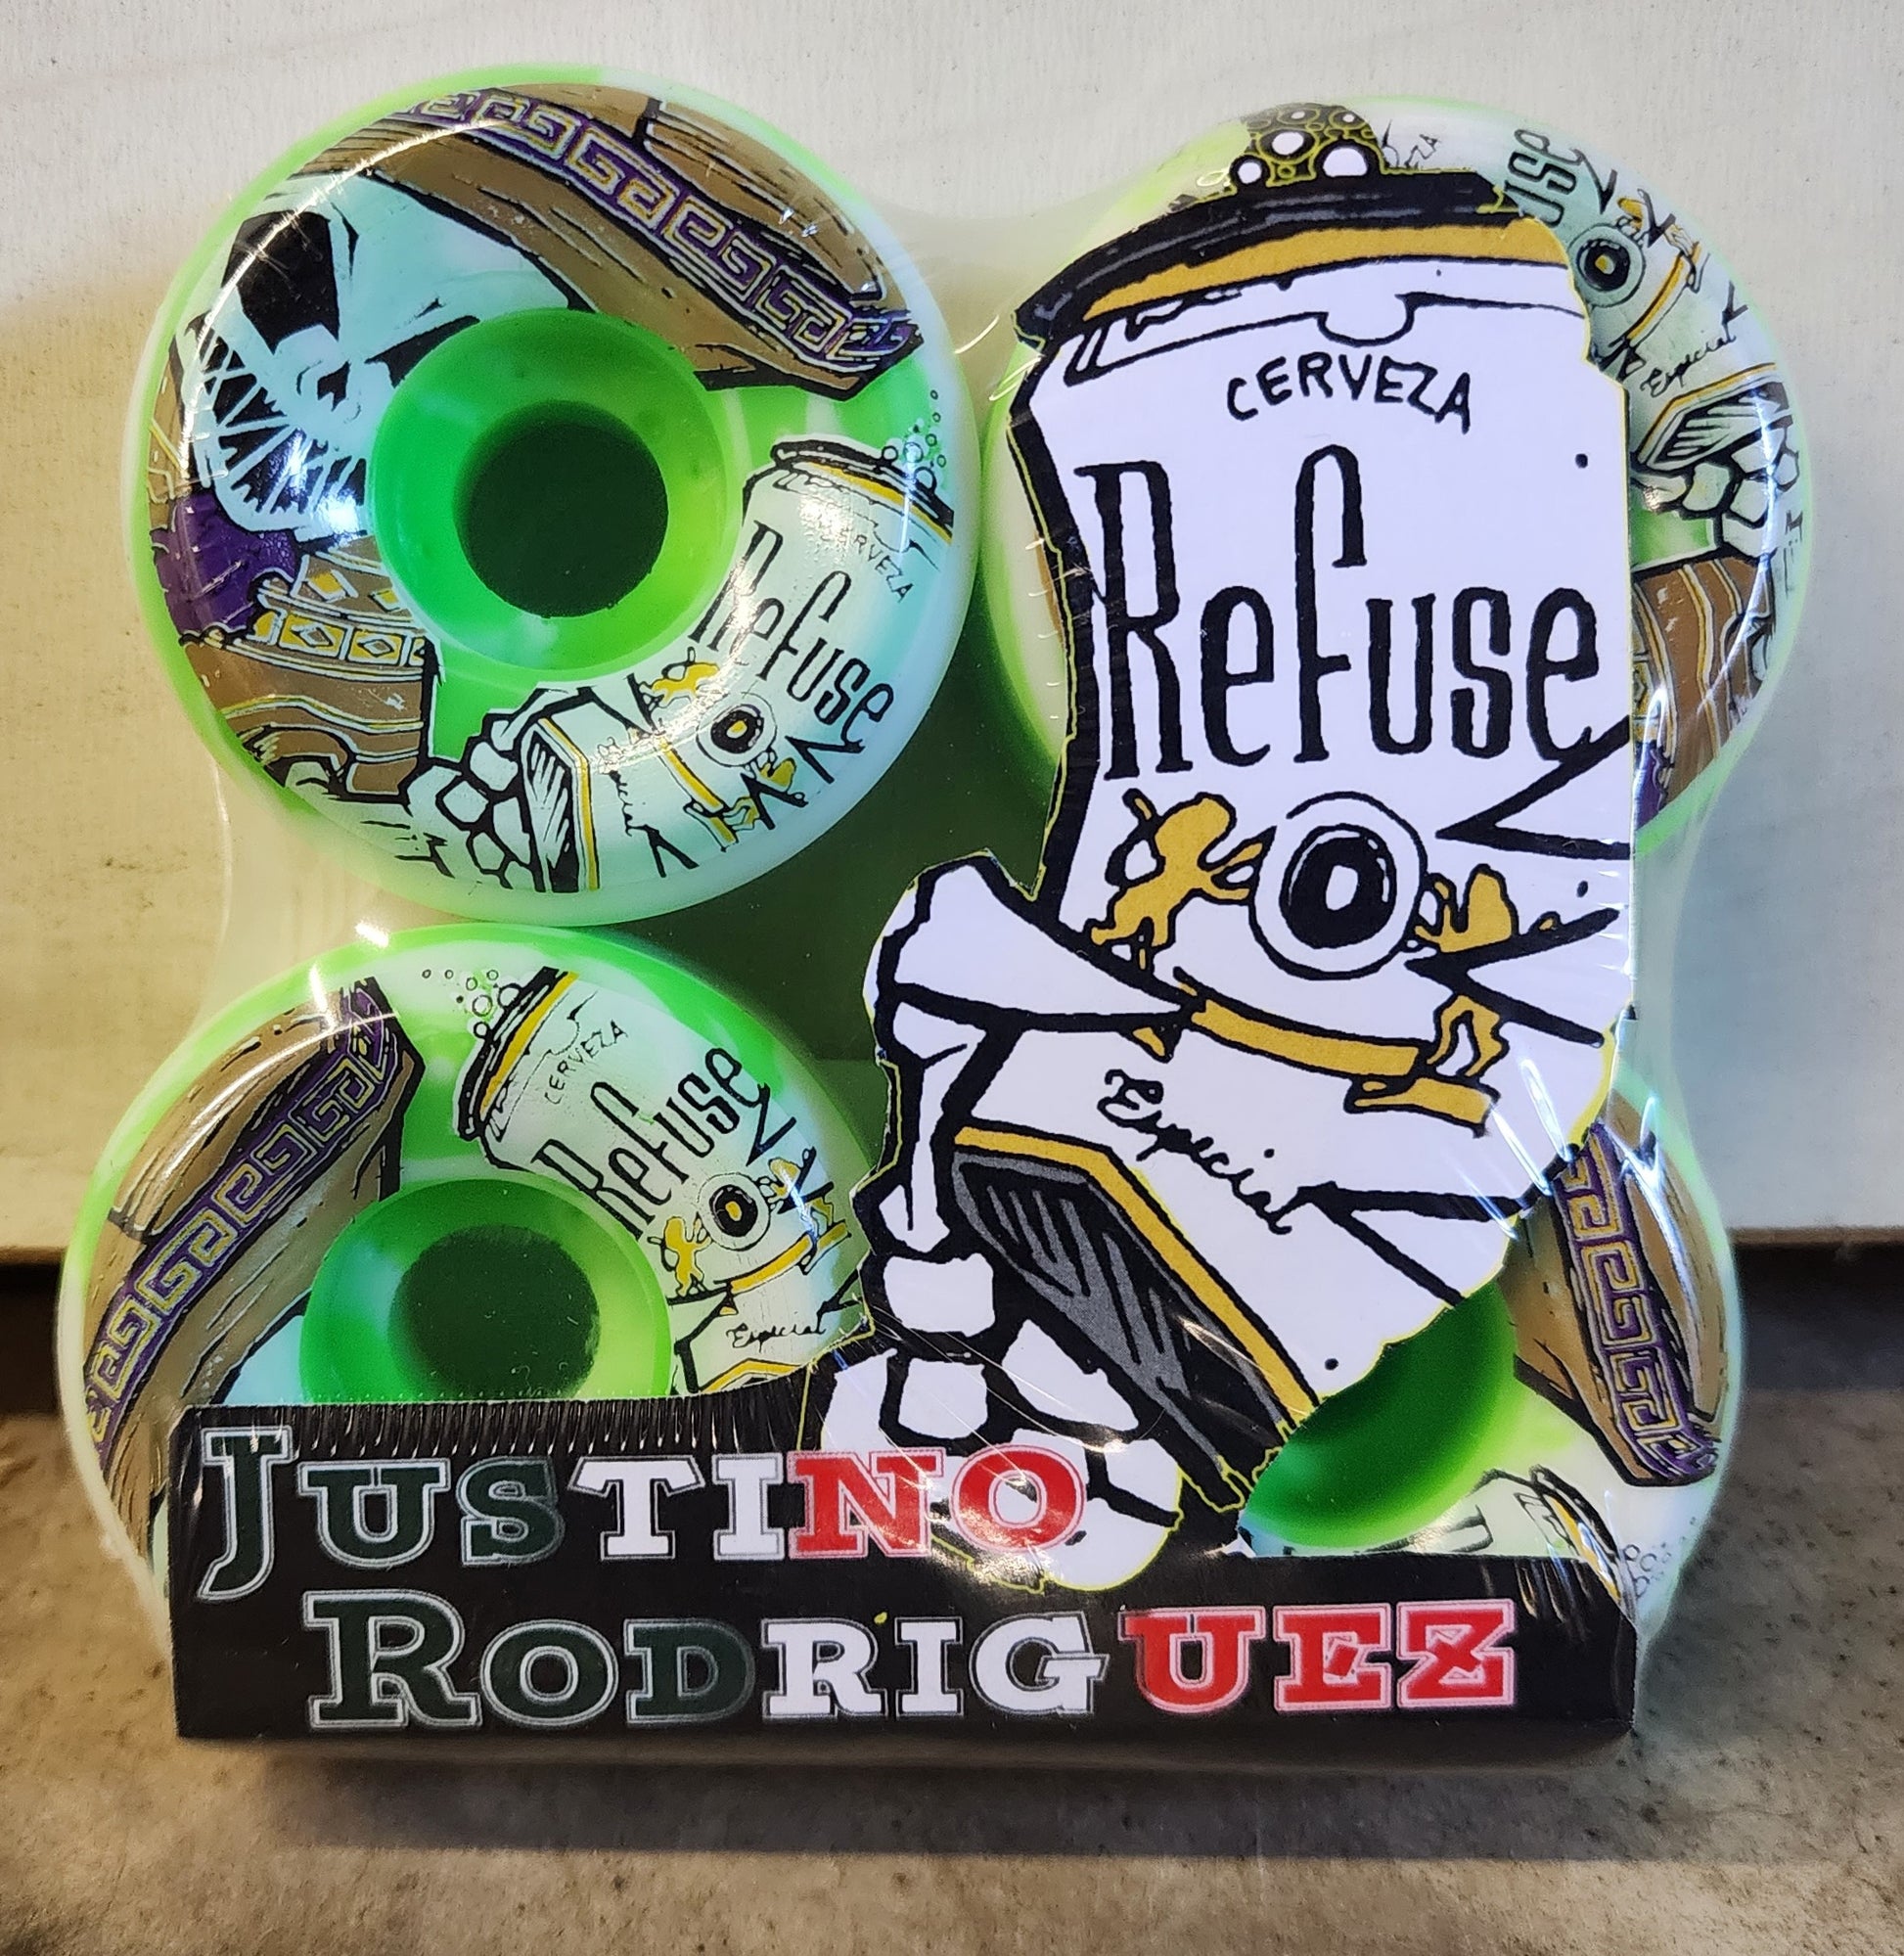 53mm Refuse Wheels - 101a Justin Rodriguez Pro - Skateboard wheel